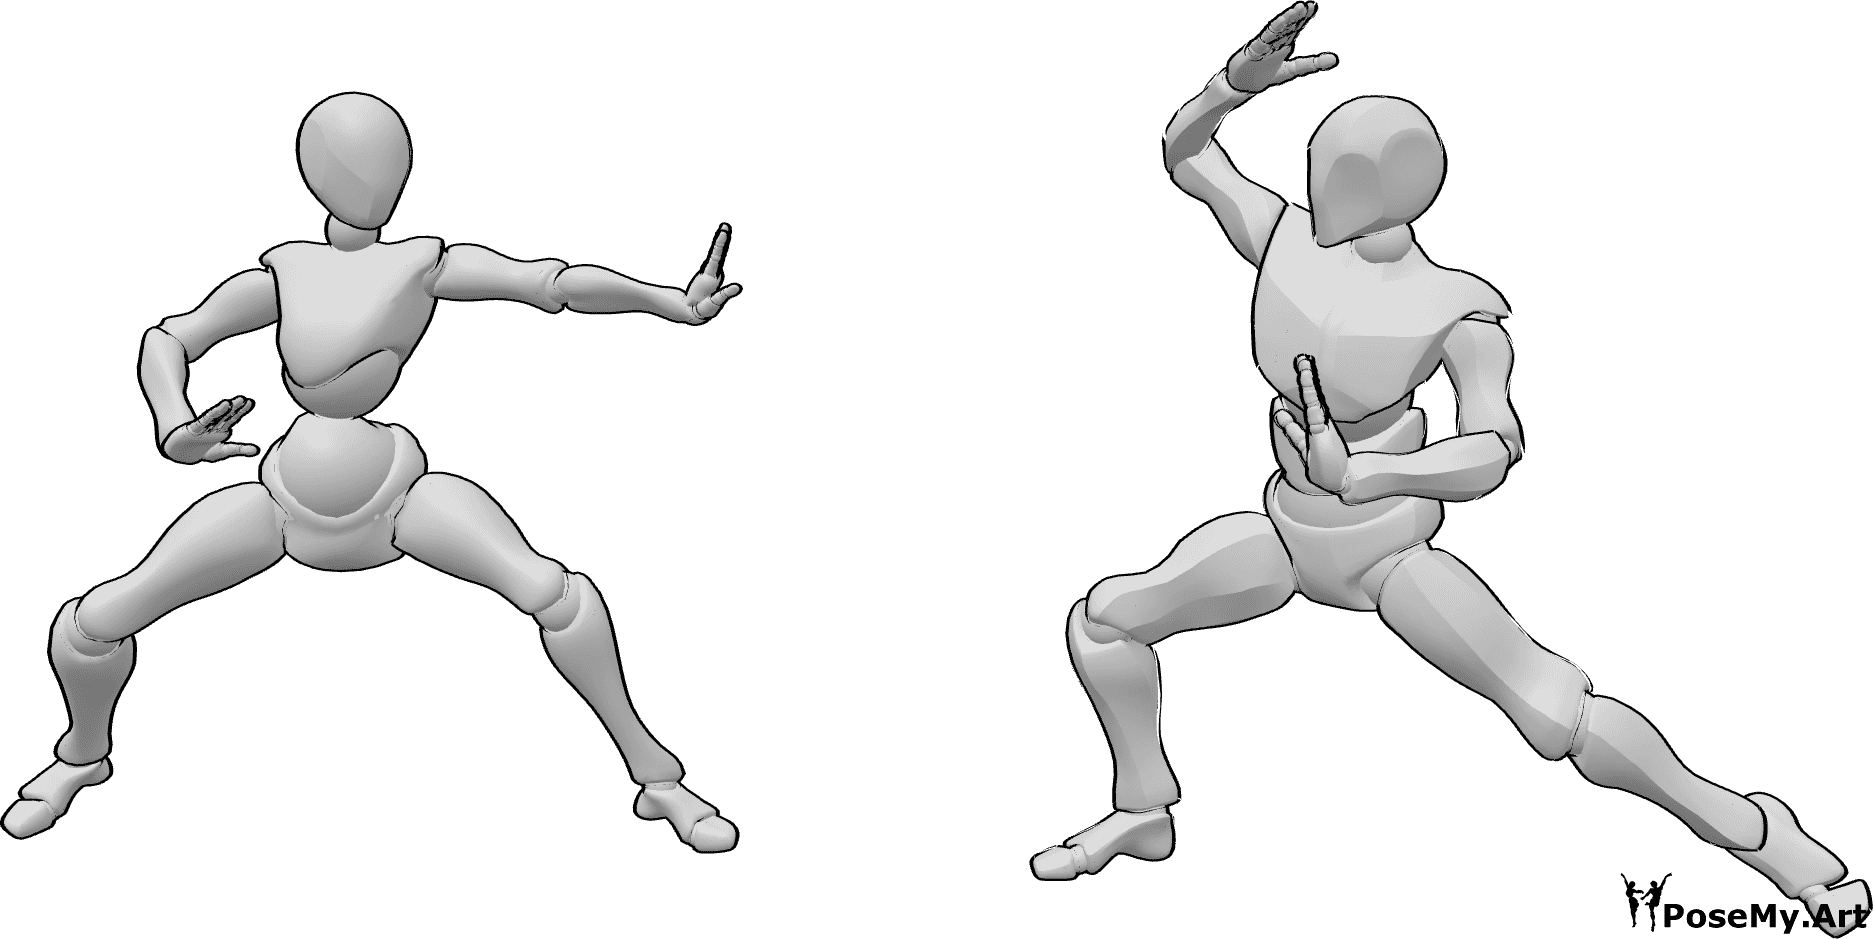 Referencia de poses- Postura de lucha femenina masculina - Postura de lucha kung fu femenina y masculina